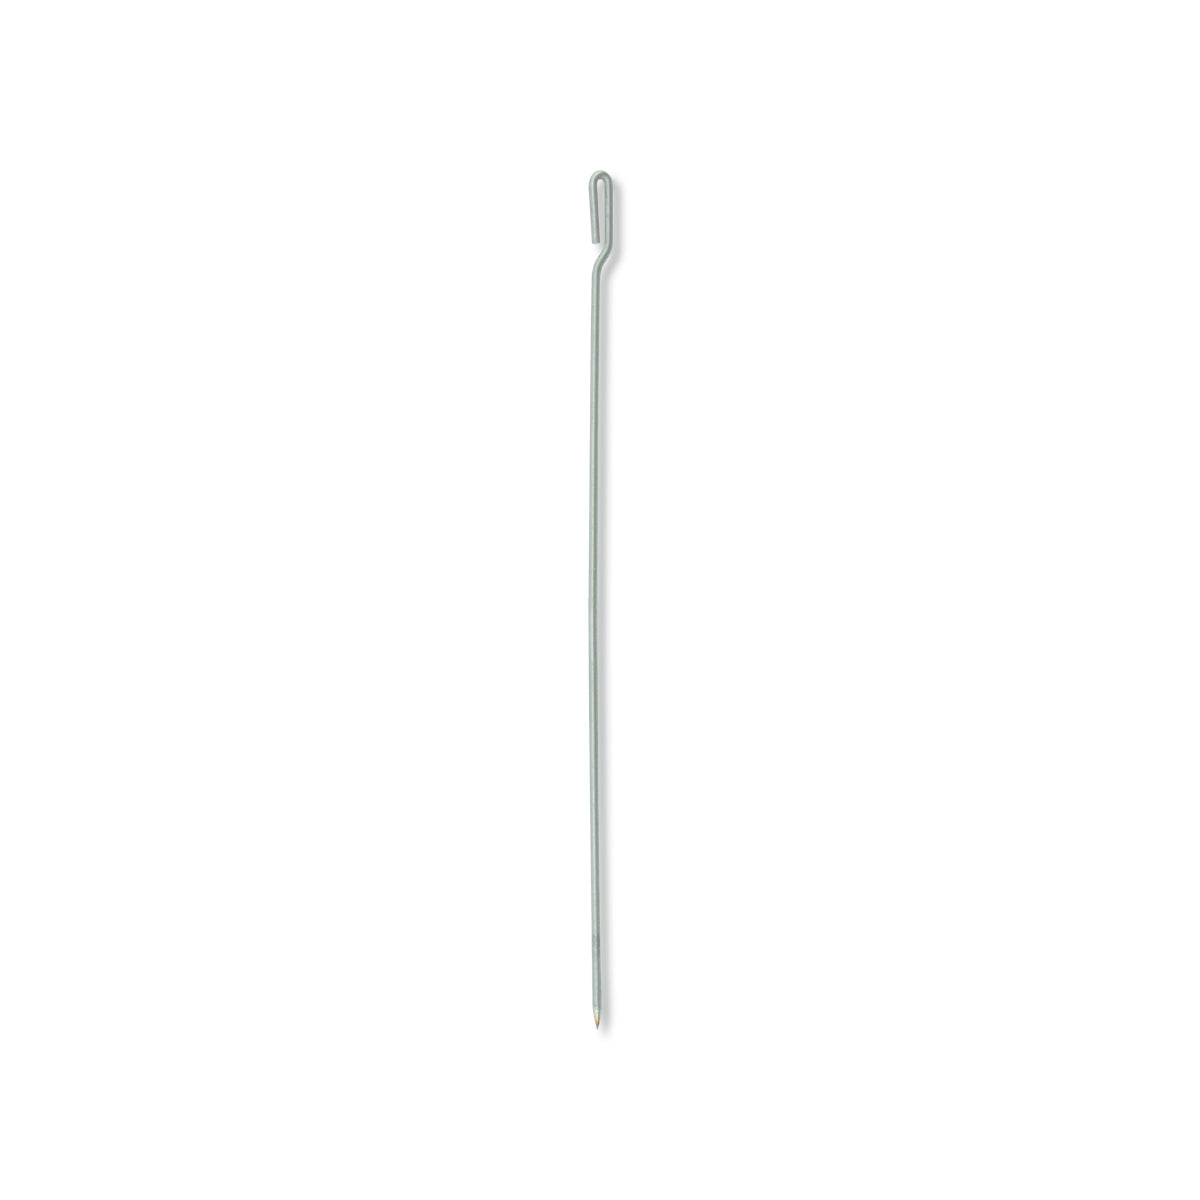 AFW - Ballyhoo Rigging Needles